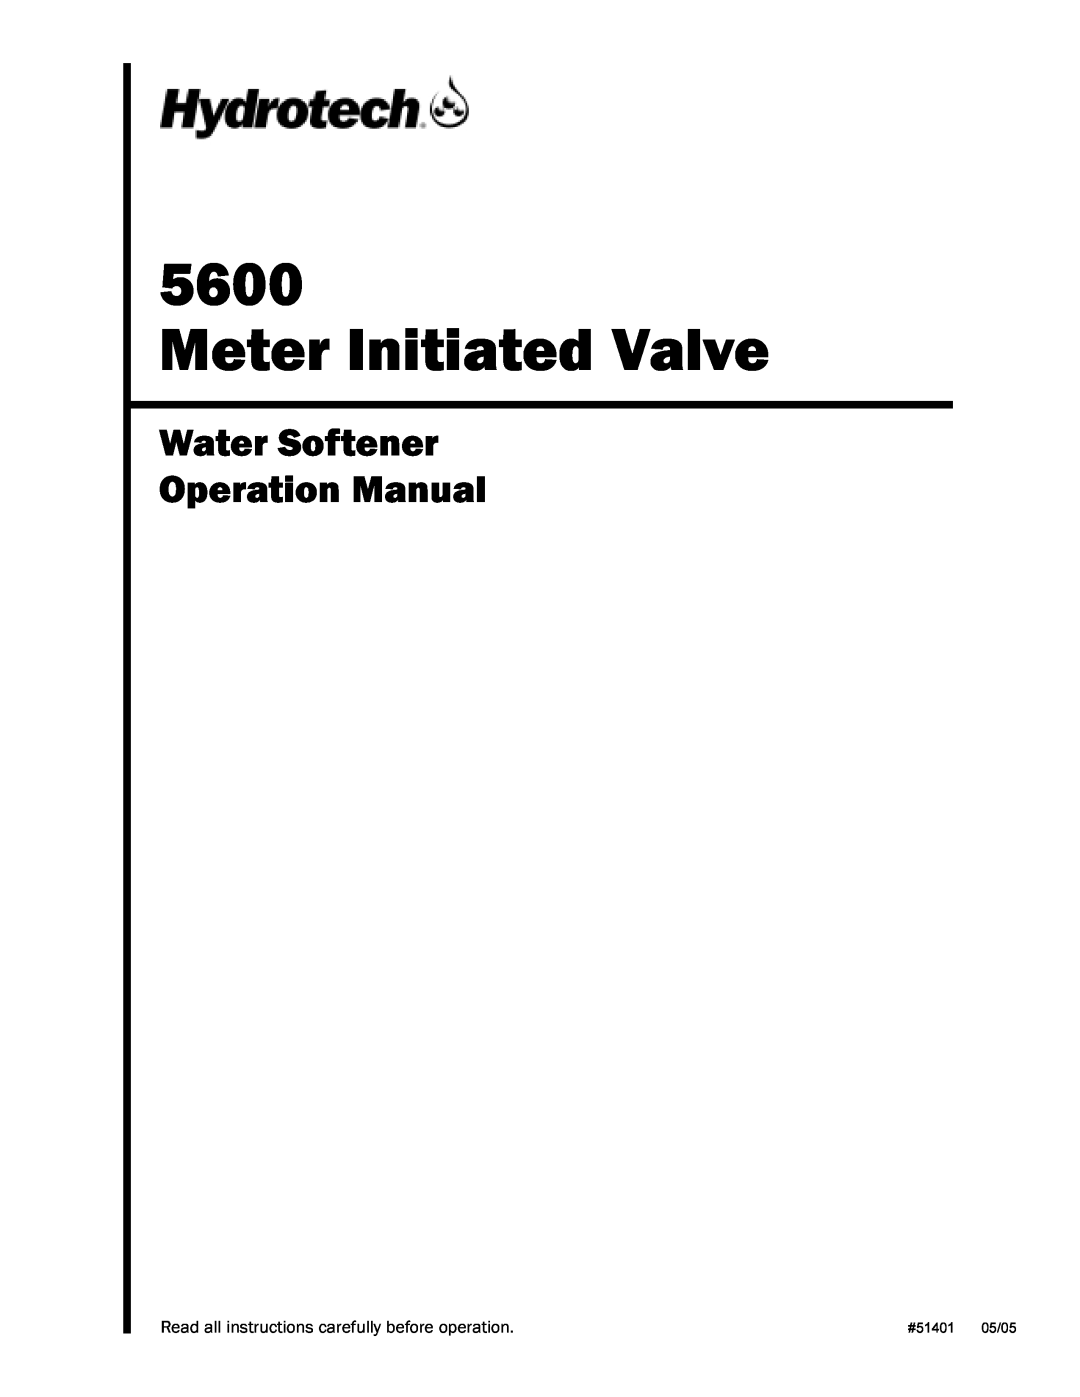 HydroSurge 5600 operation manual Meter Initiated Valve, Water Softener Operation Manual, #51401, 05/05 